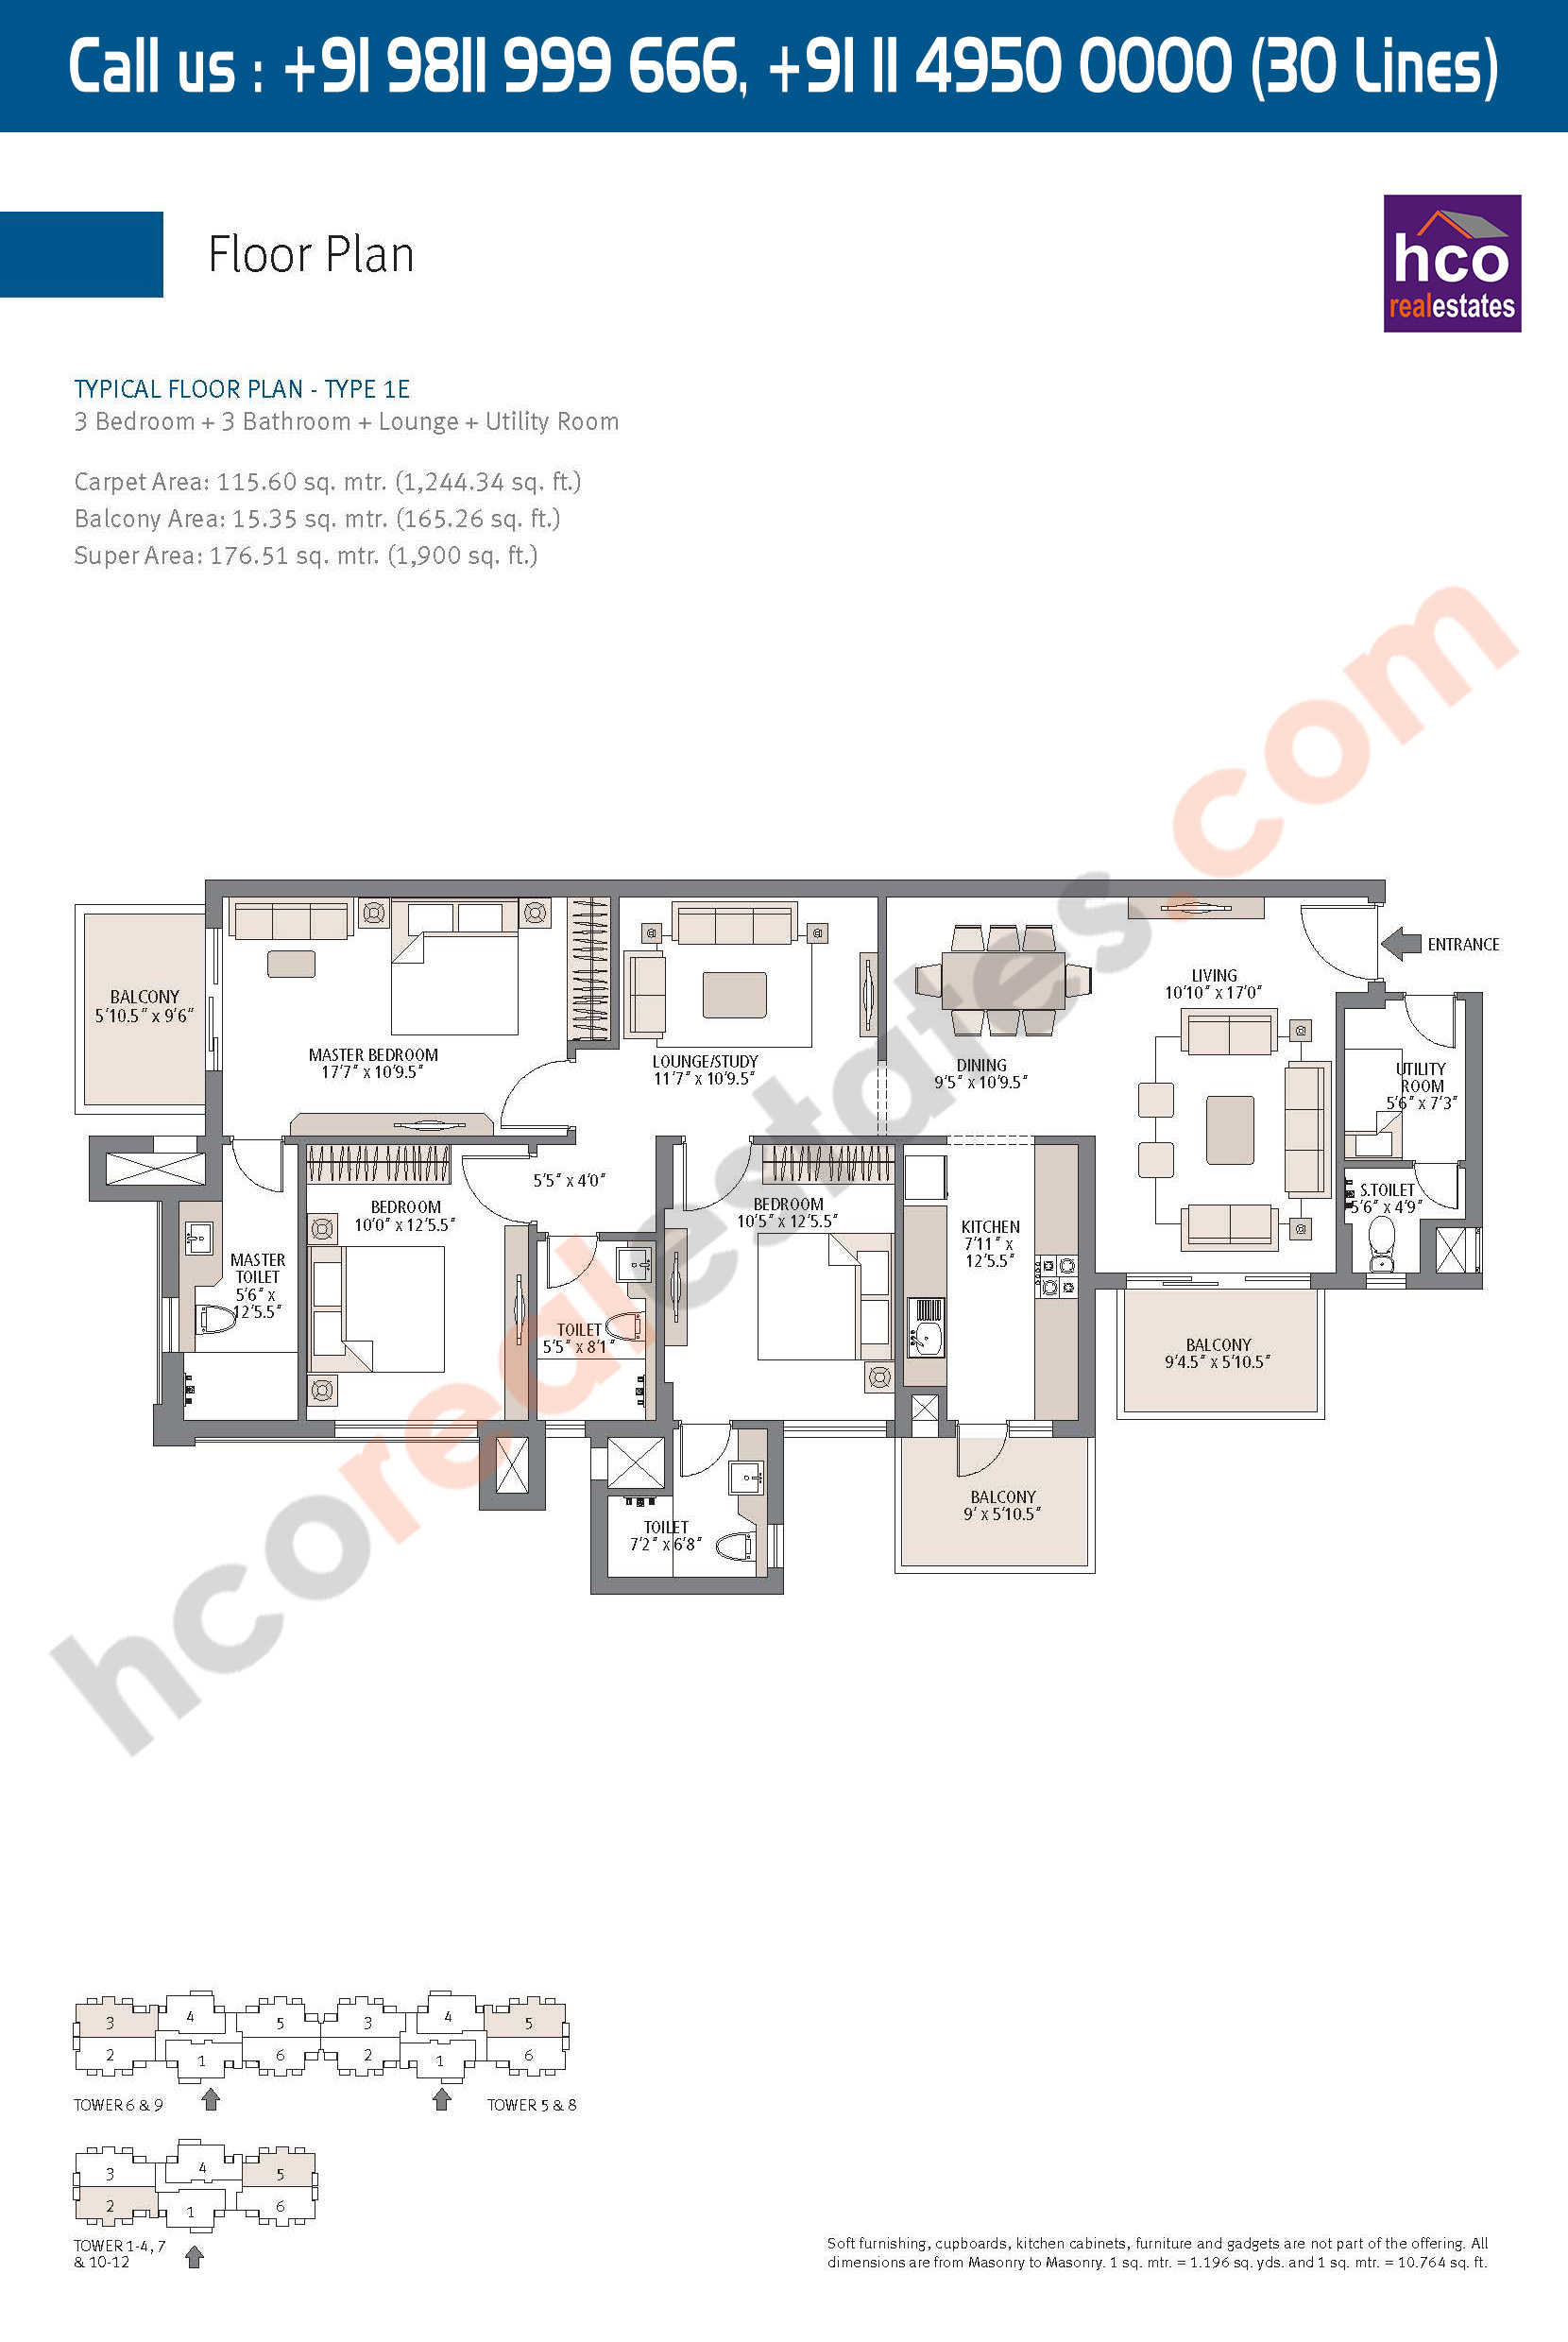 Type - 1E, Typical Floor Plan, Carpet Area : 1244 Sq. Ft